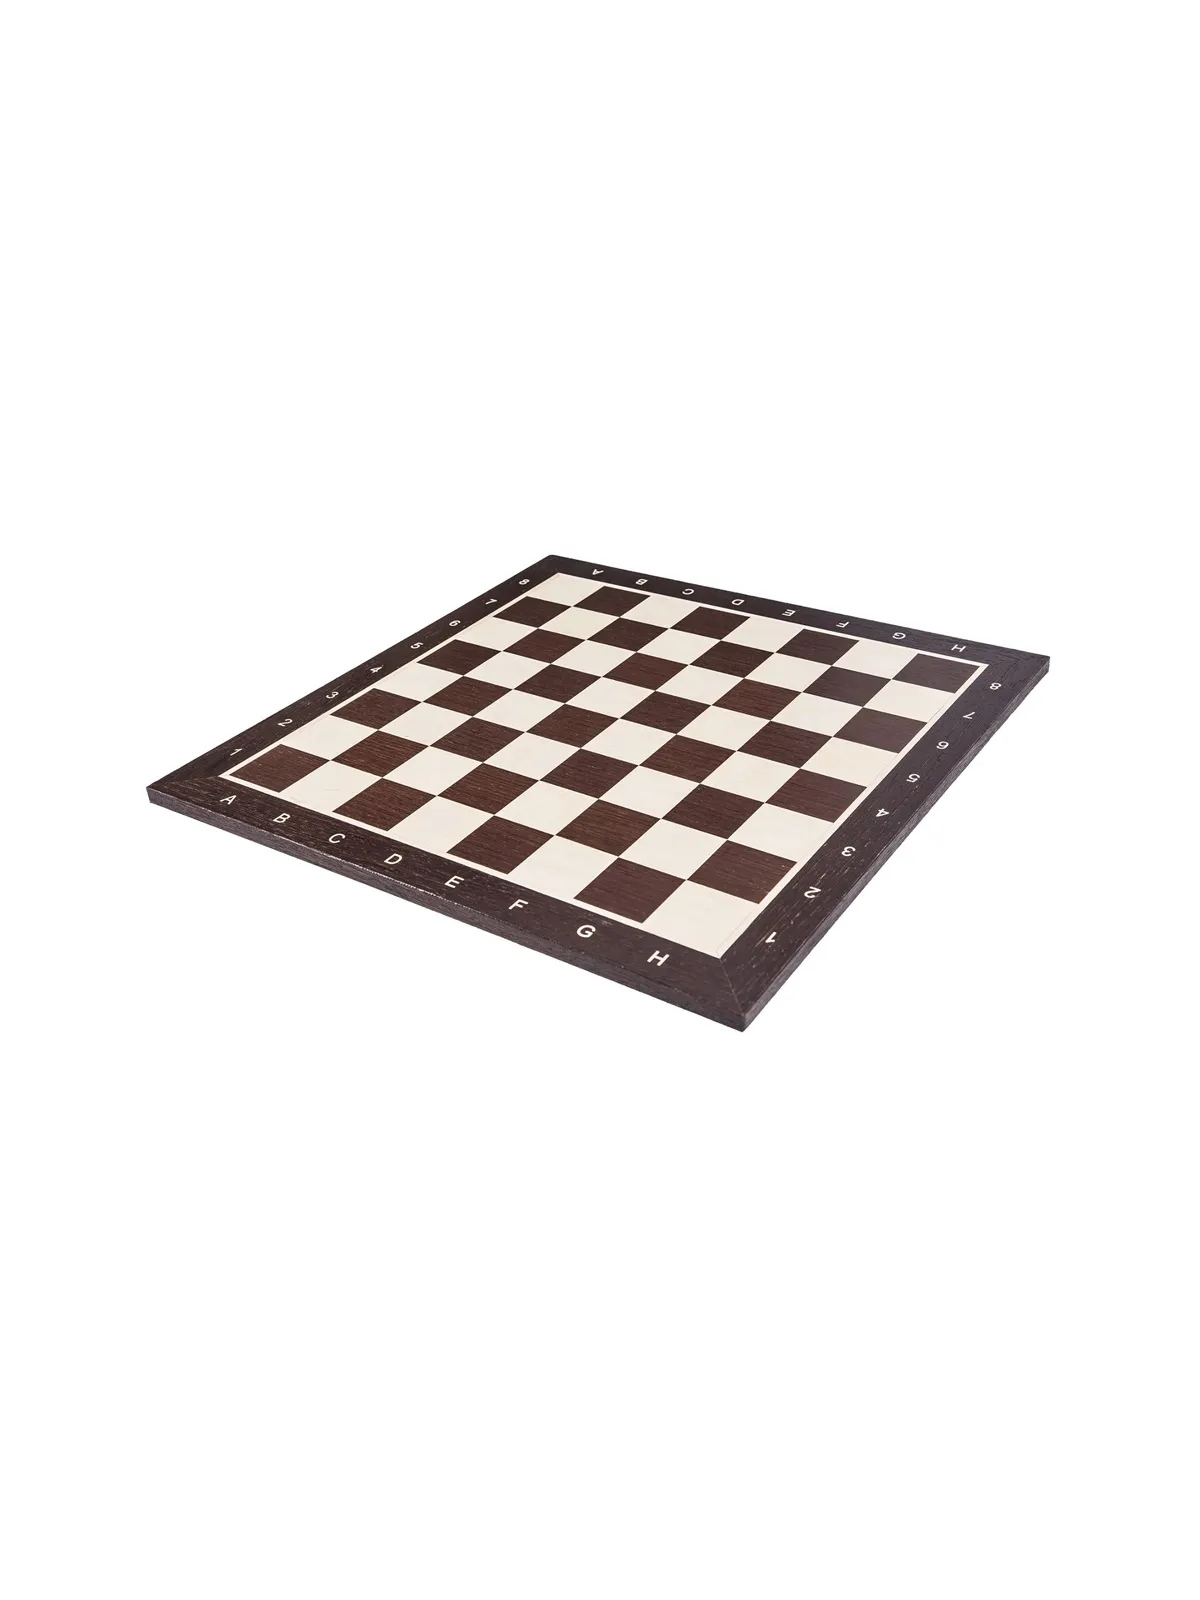 Chessboard No. 6 - Wenge